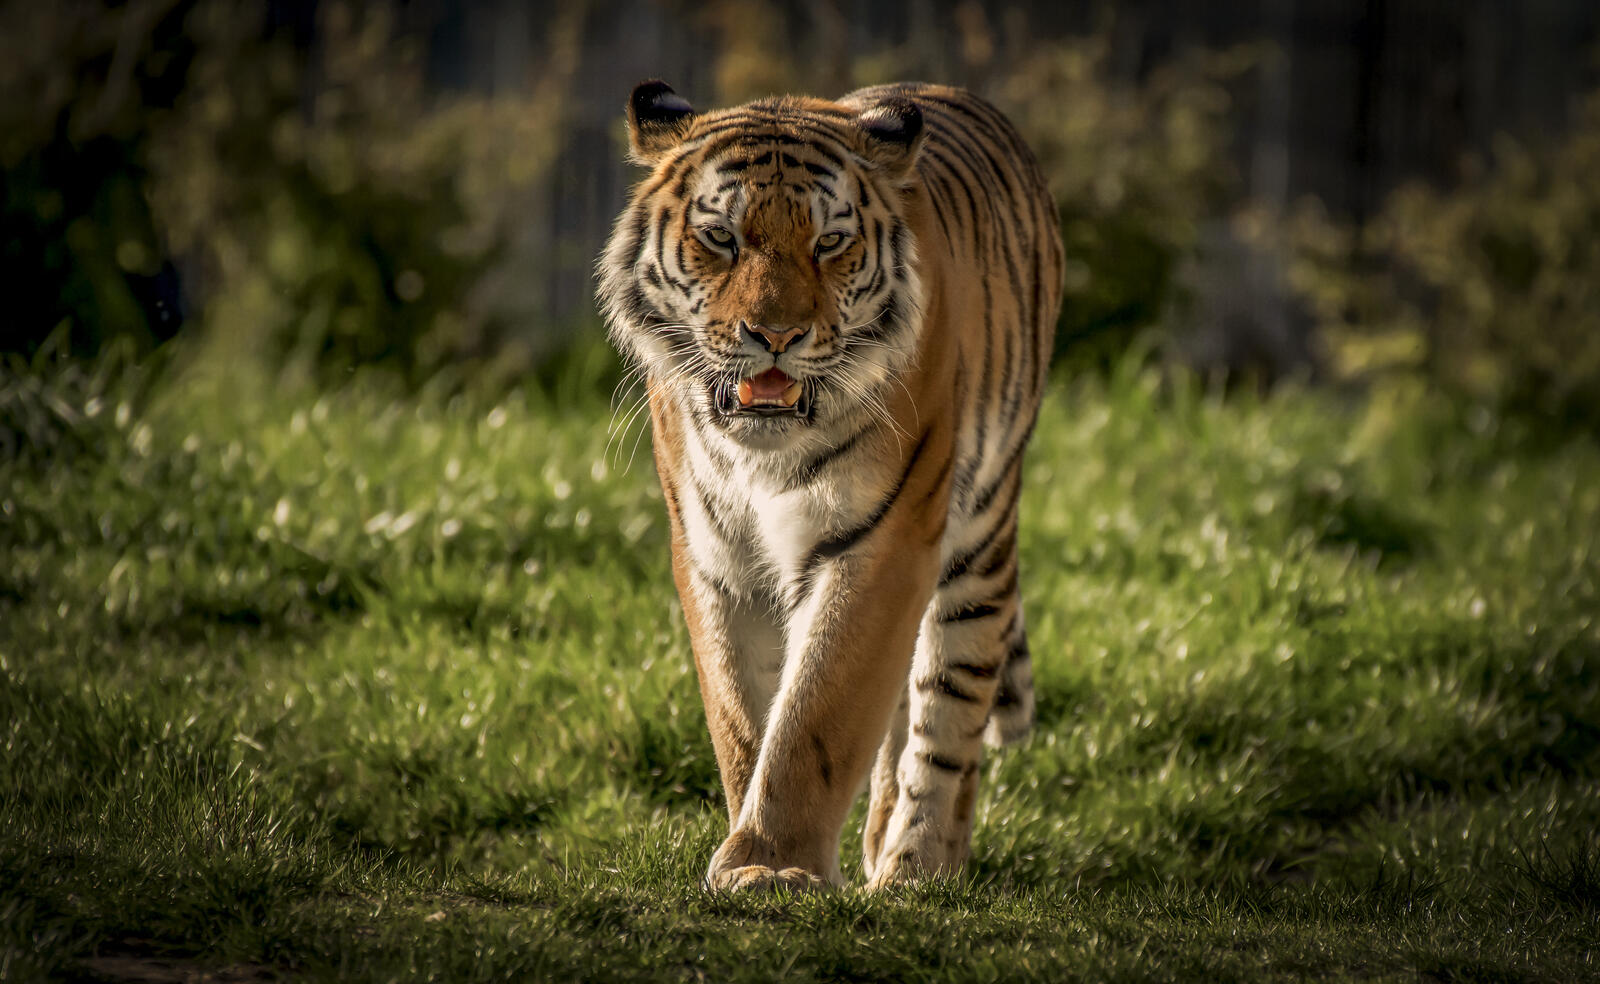 Wallpapers predator panthera tigris altaica Amur tiger on the desktop